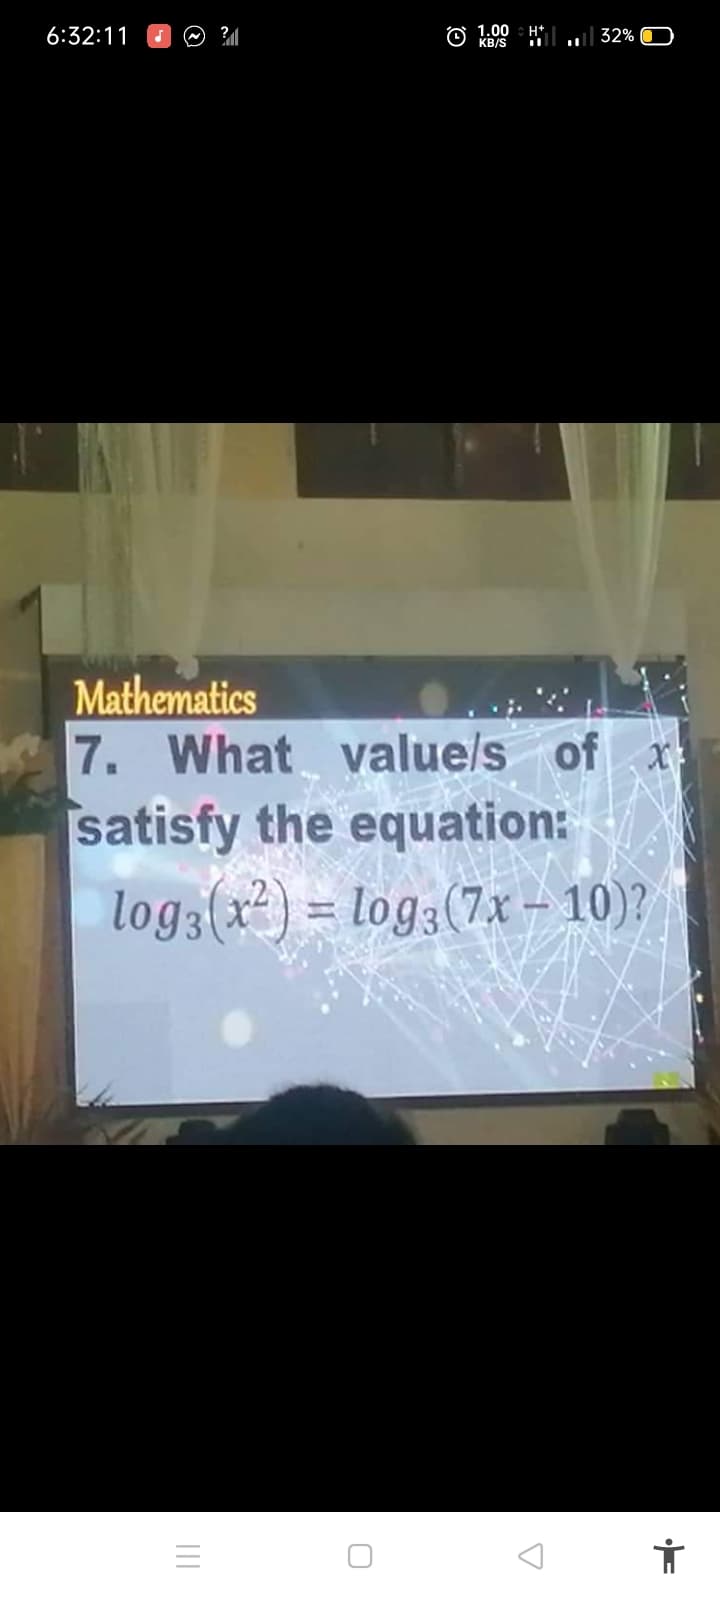 6:32:11
1.00
H+
32% C
Mathematics
7. What value/s of x
satisfy the equation:
log3(x²) = log3(7x – 10)?
